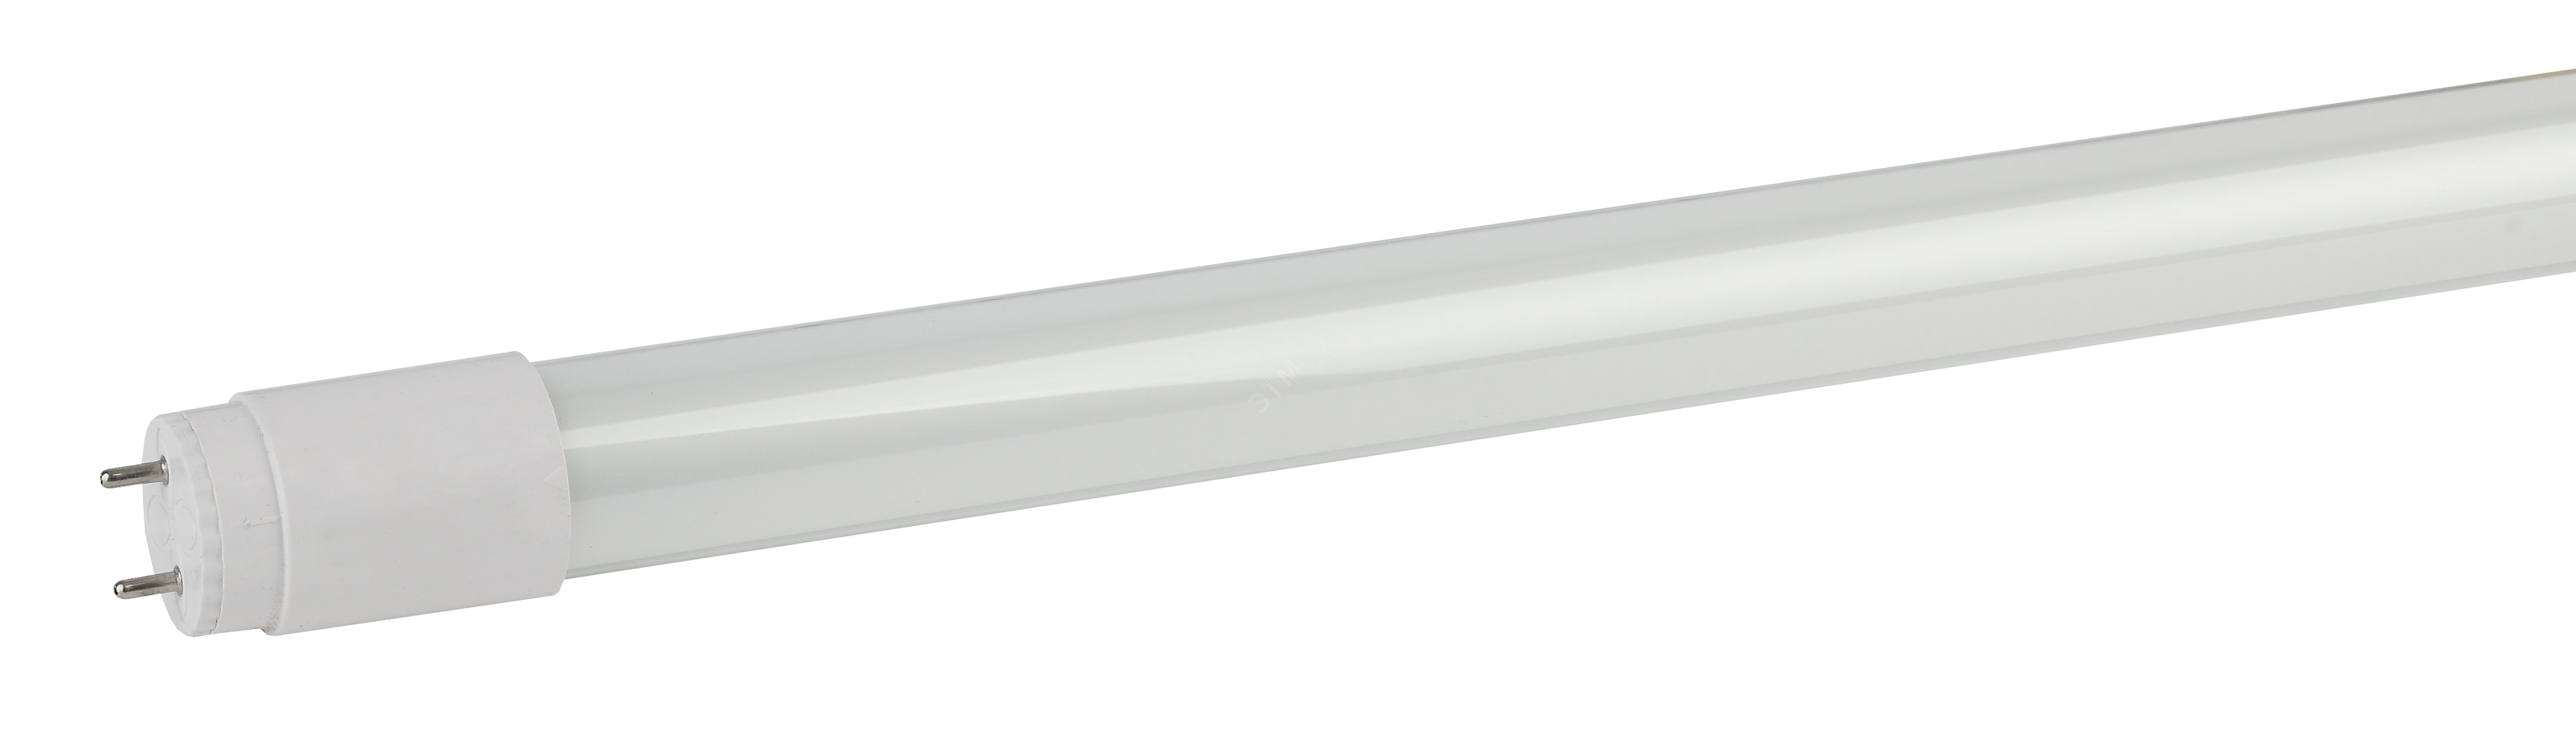 Лампа светодиодная LED 10Вт G13 4000K 600мм Т8 910Лм труб пов нейтр Б0032999 ЭРА - превью